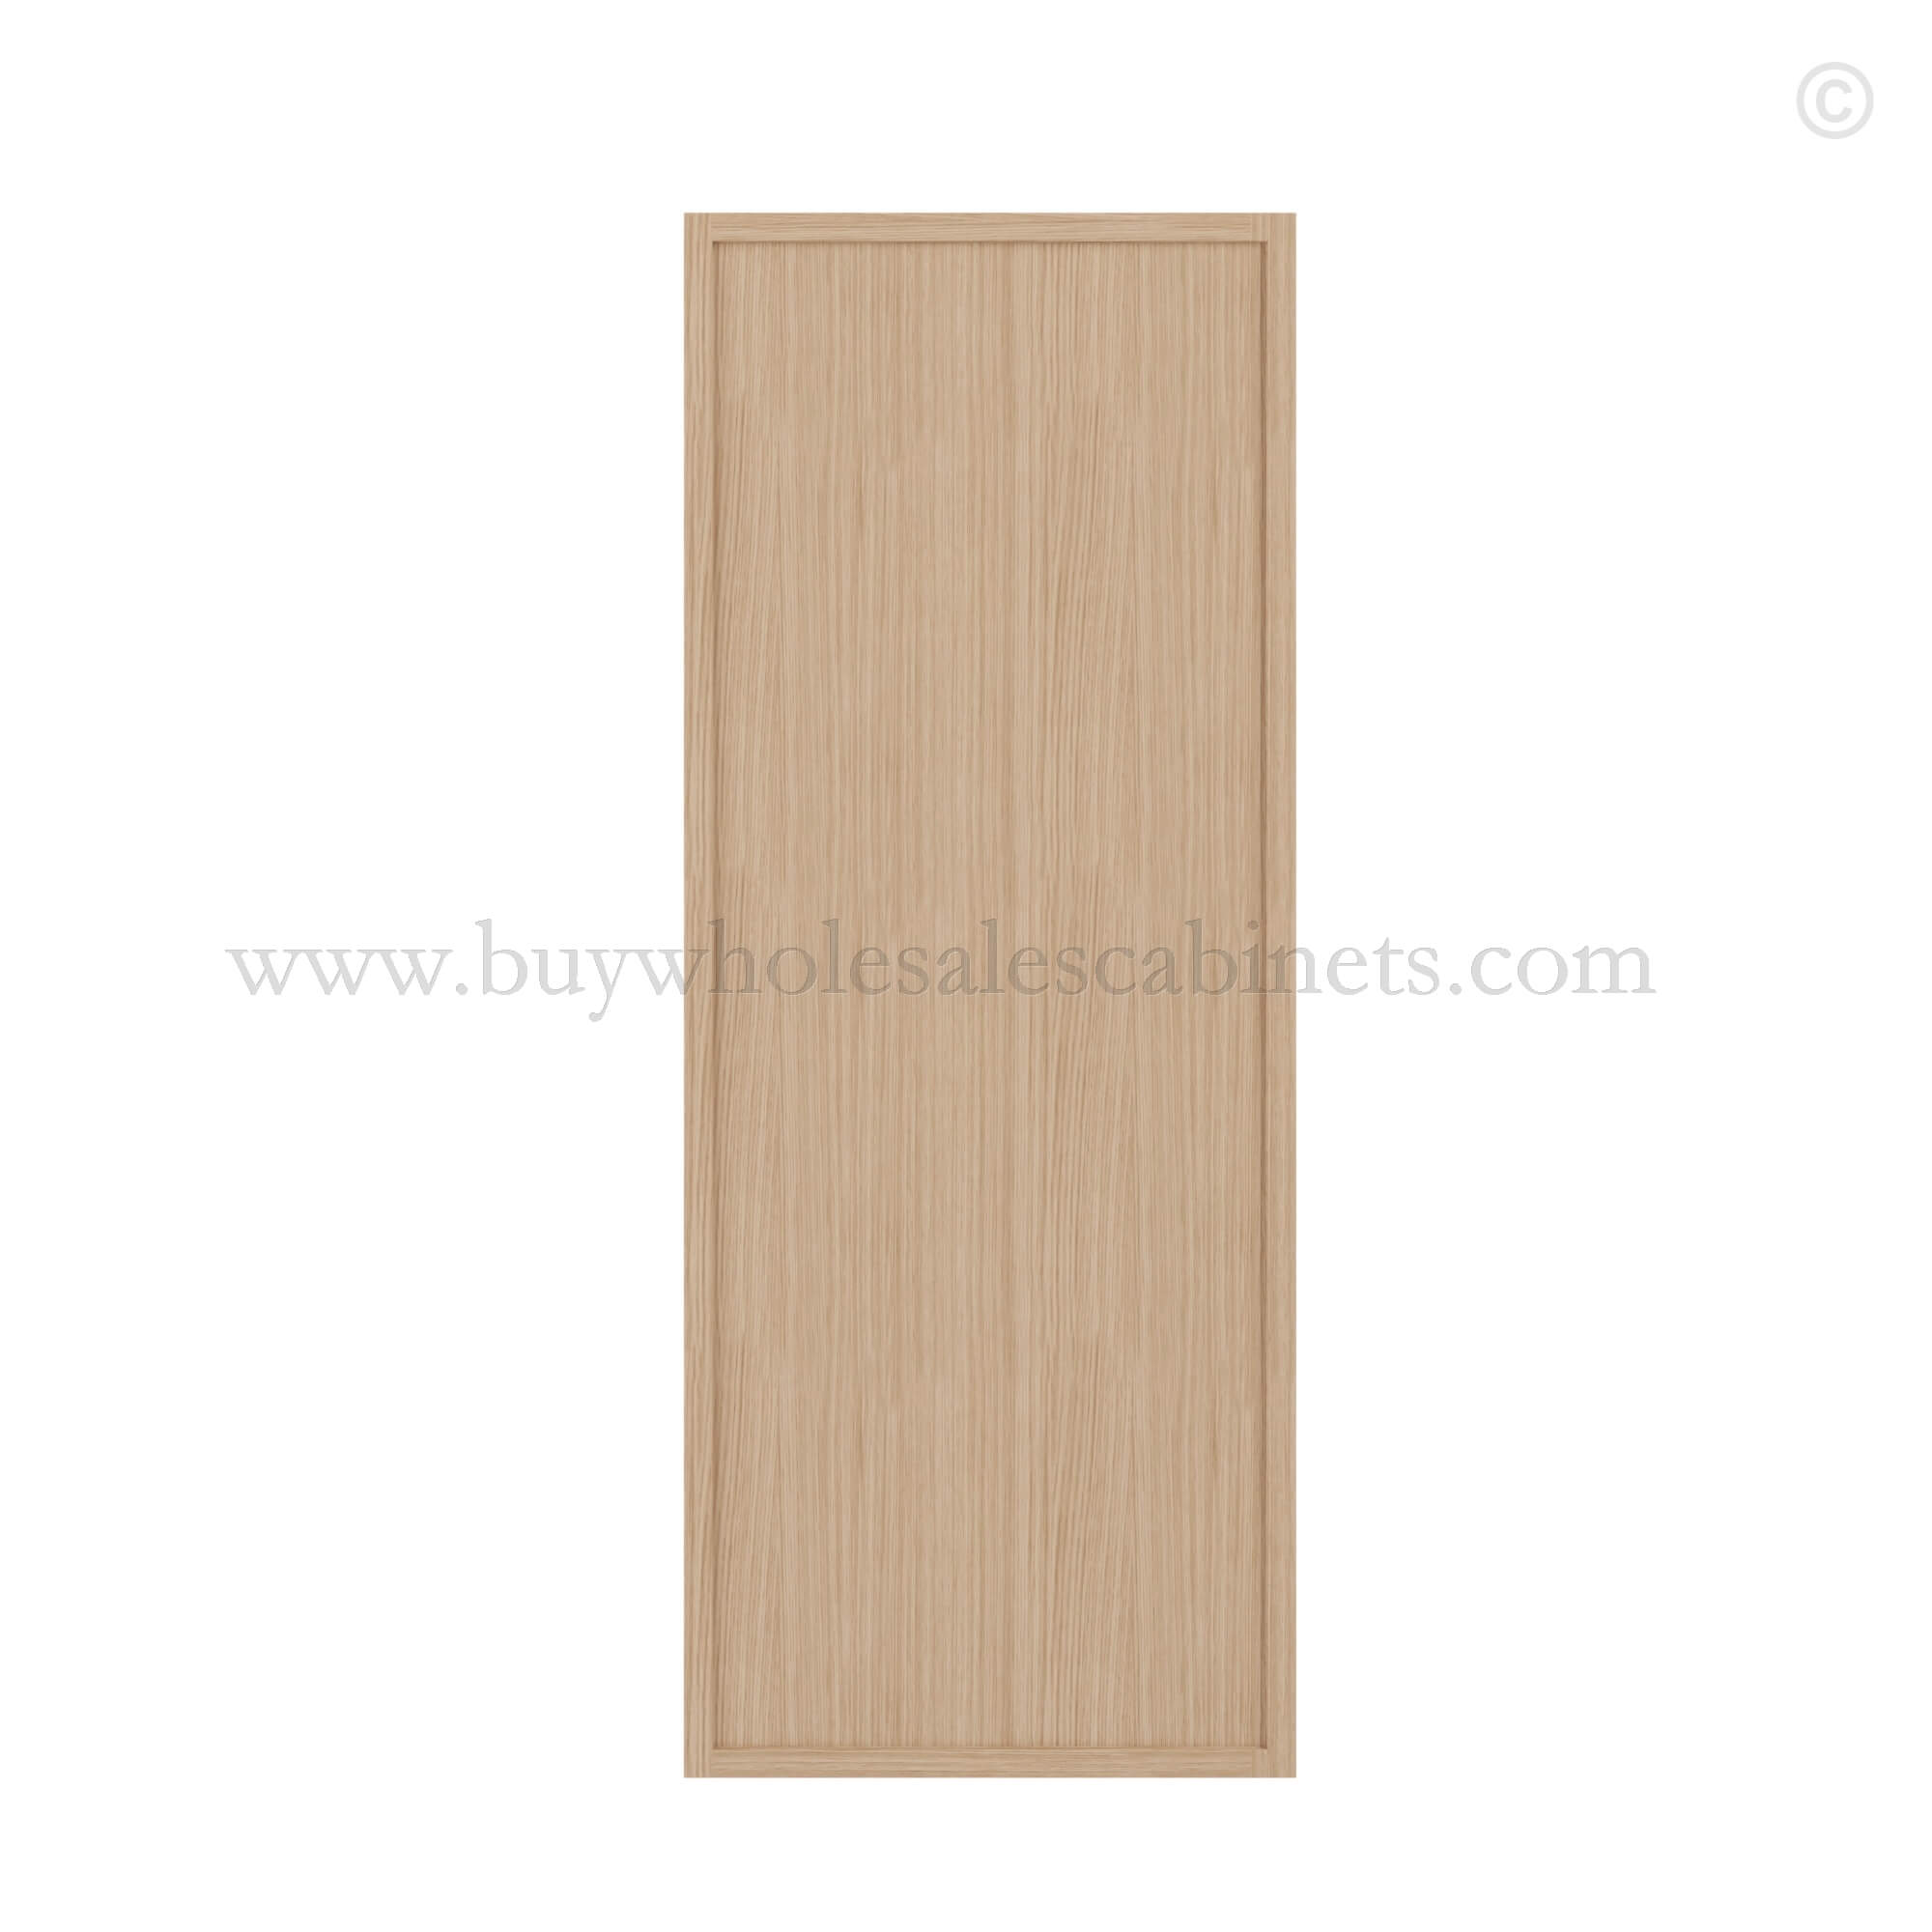 Slim Oak Shaker Wall Decorative Door Panel, rta cabinets, wholesale cabinets